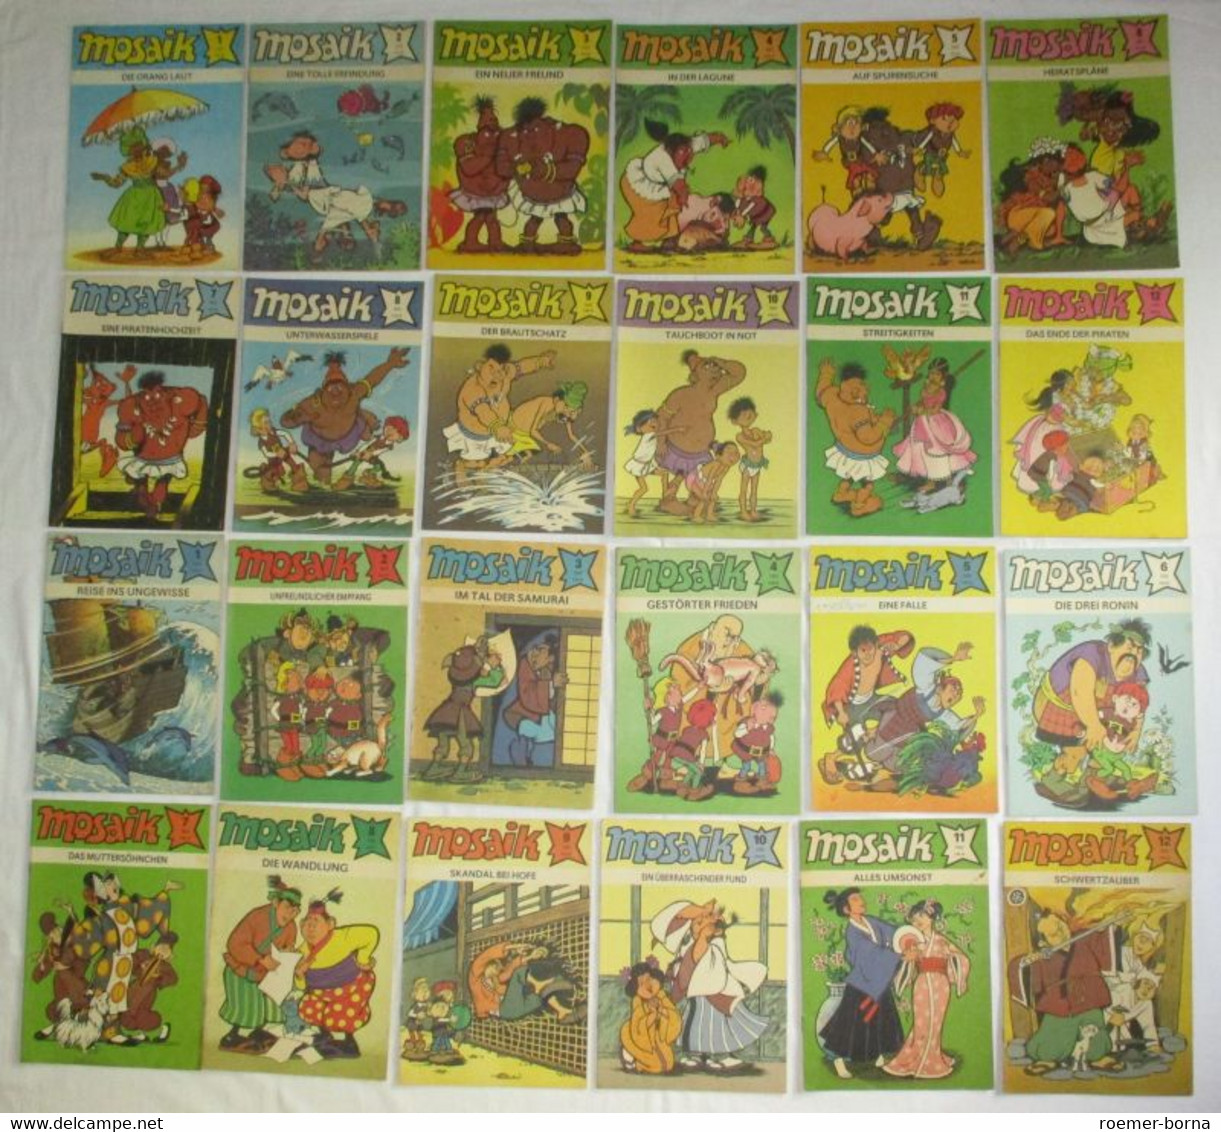 Mosaik Abrafaxe 1/1976 bis 252/1996 komplett 252 Hefte (125068)